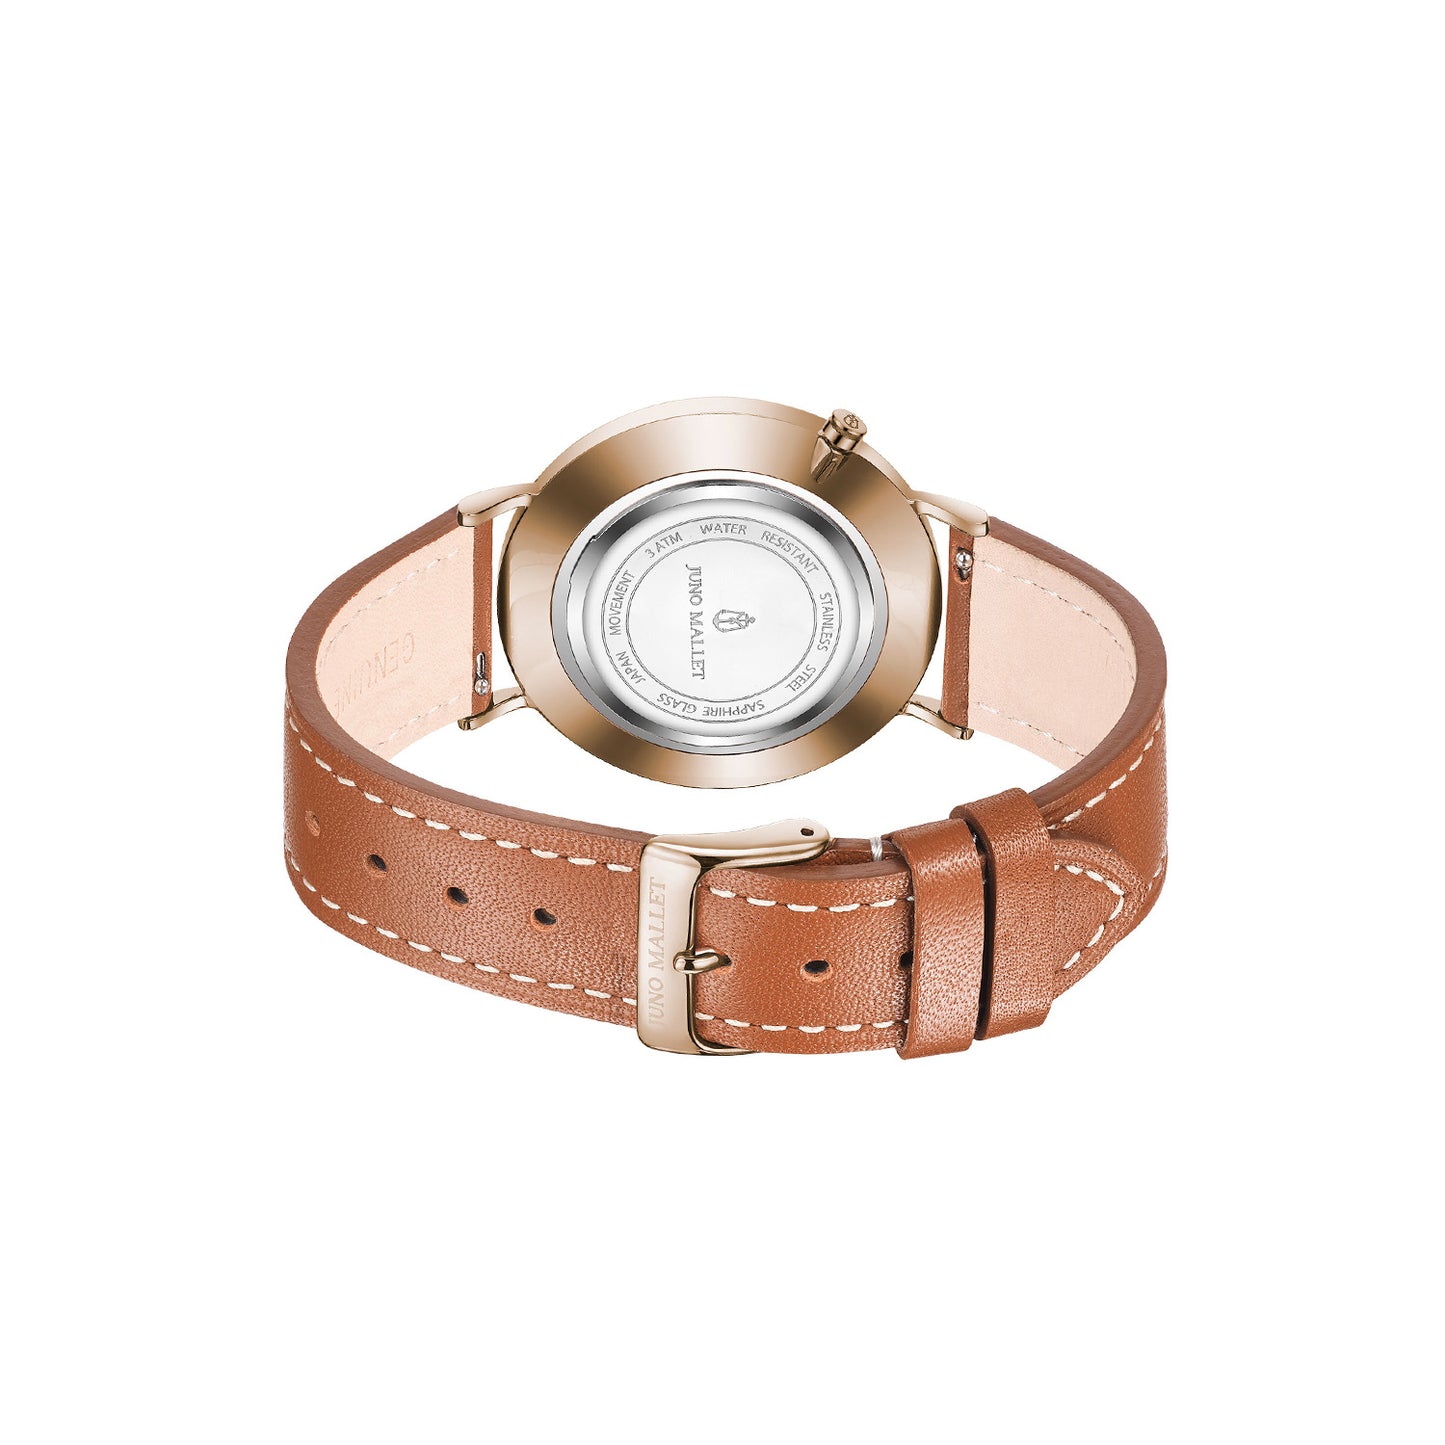 Thomas / Classic Bracelet Watch / Cream White / Light Brown / Rose Gold / 40mm